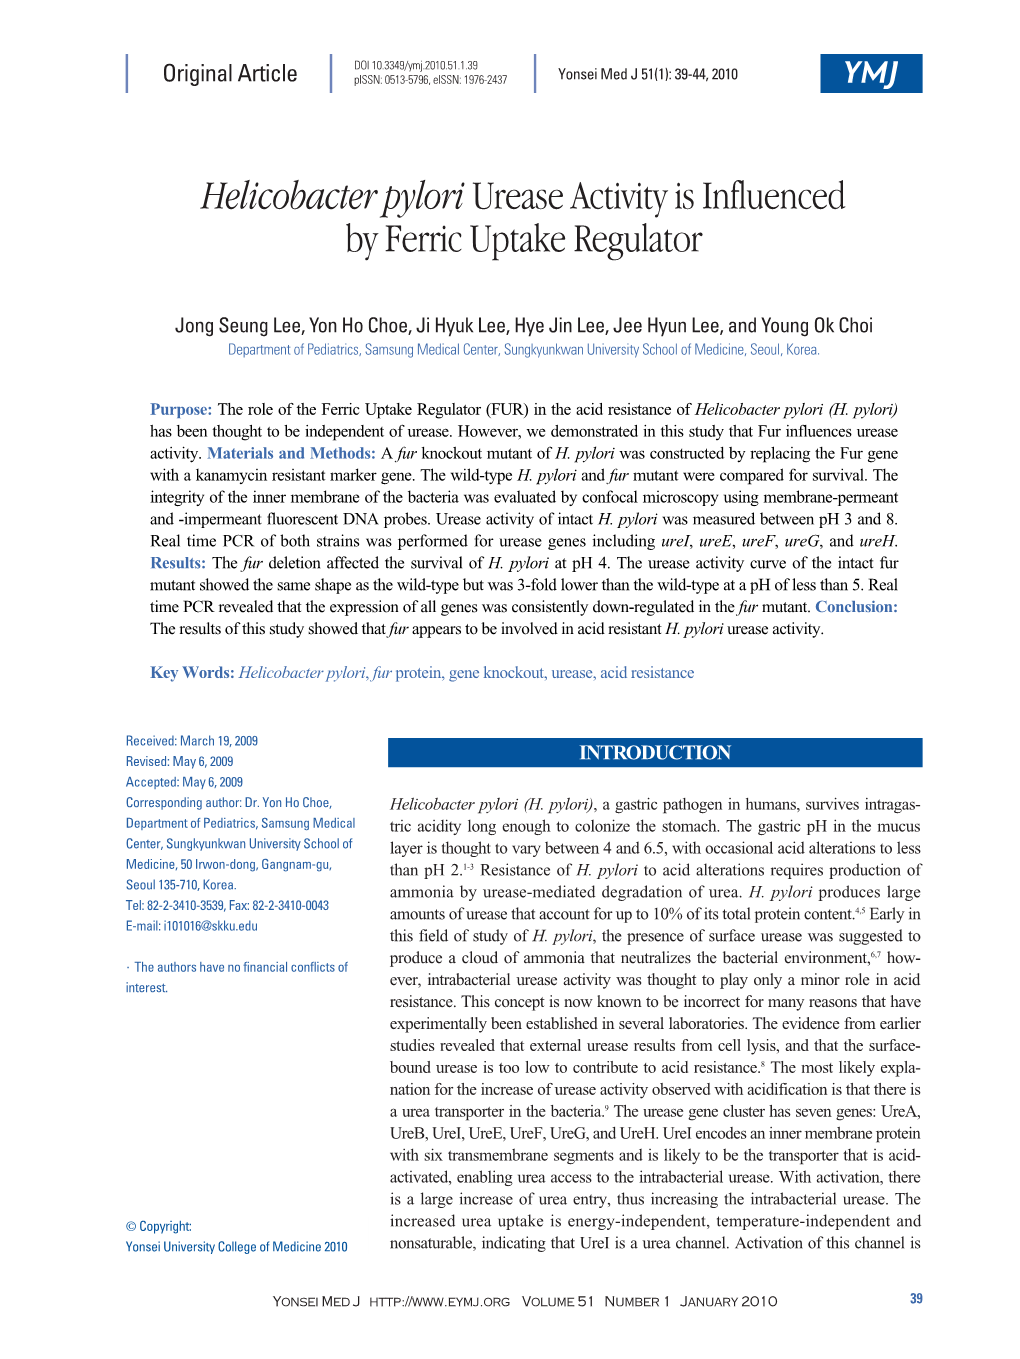 Helicobacter Pyloriurease Activity Is Influenced by Ferric Uptake Regulator